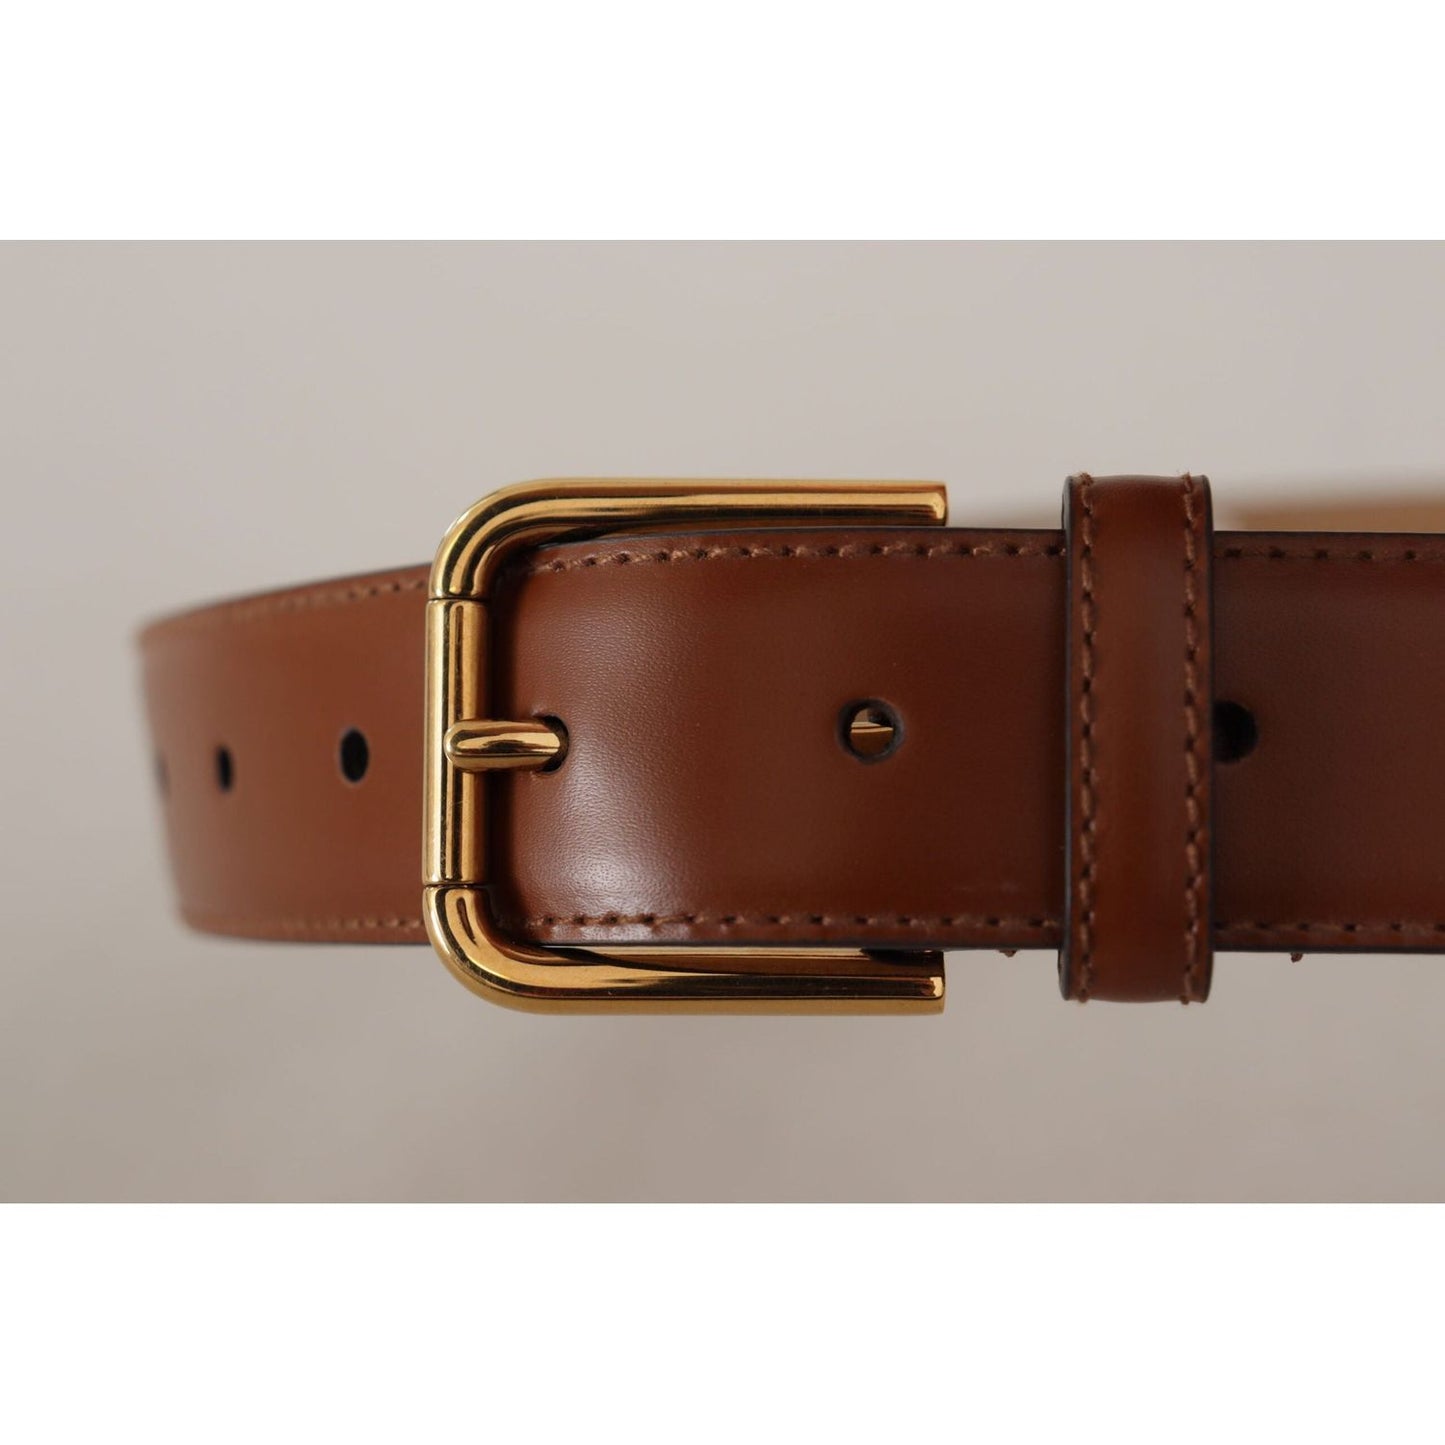 Dolce & Gabbana Elegant Leather Belt with Engraved Buckle brown-leather-polished-gold-metal-waist-buckle-belt IMG_8952-scaled-47393696-c55.jpg